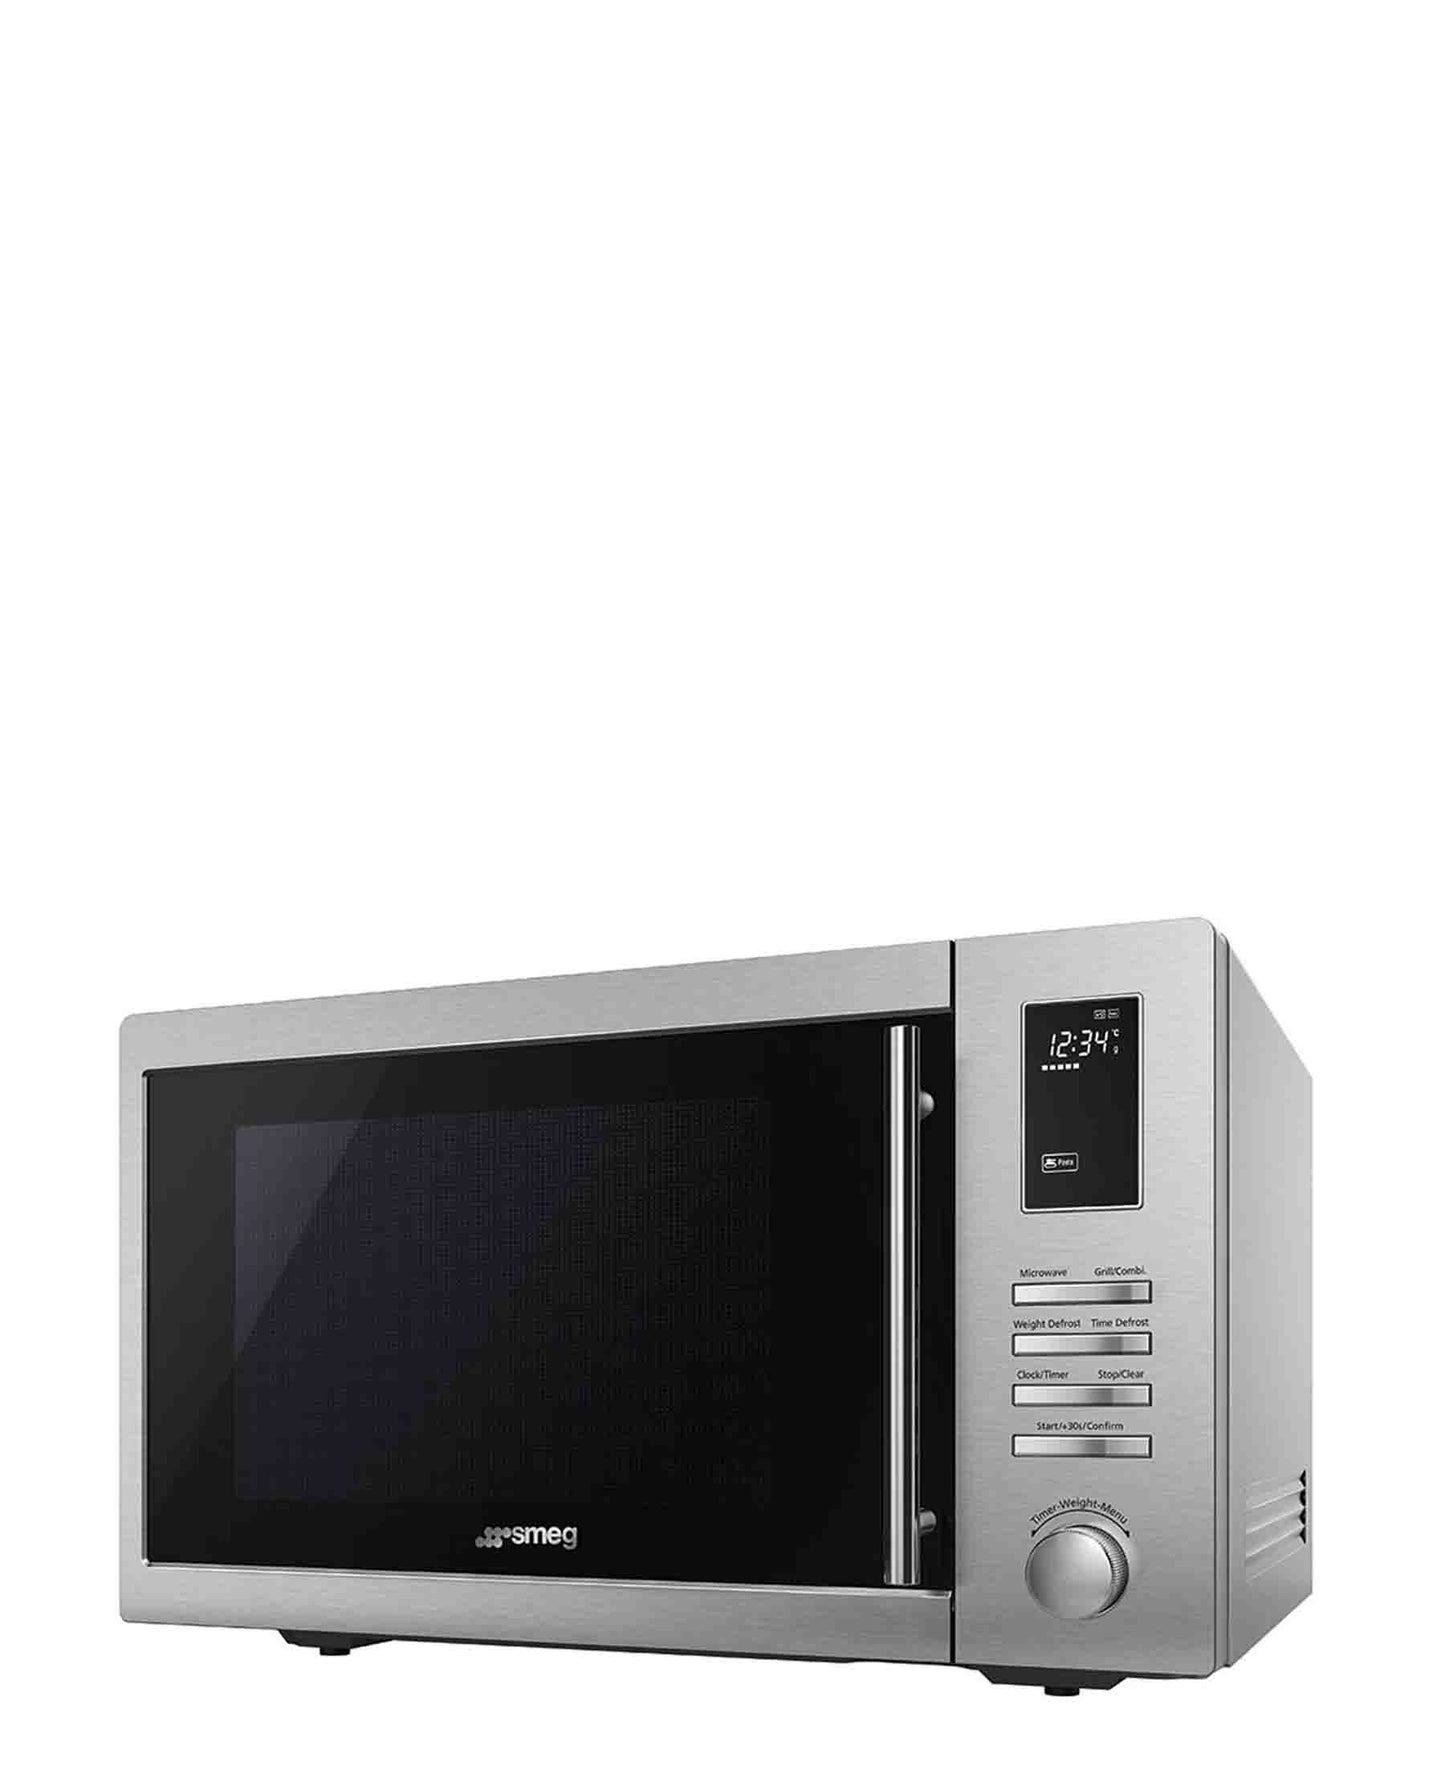 Smeg 25Lt Countertop Microwave Oven - Silver